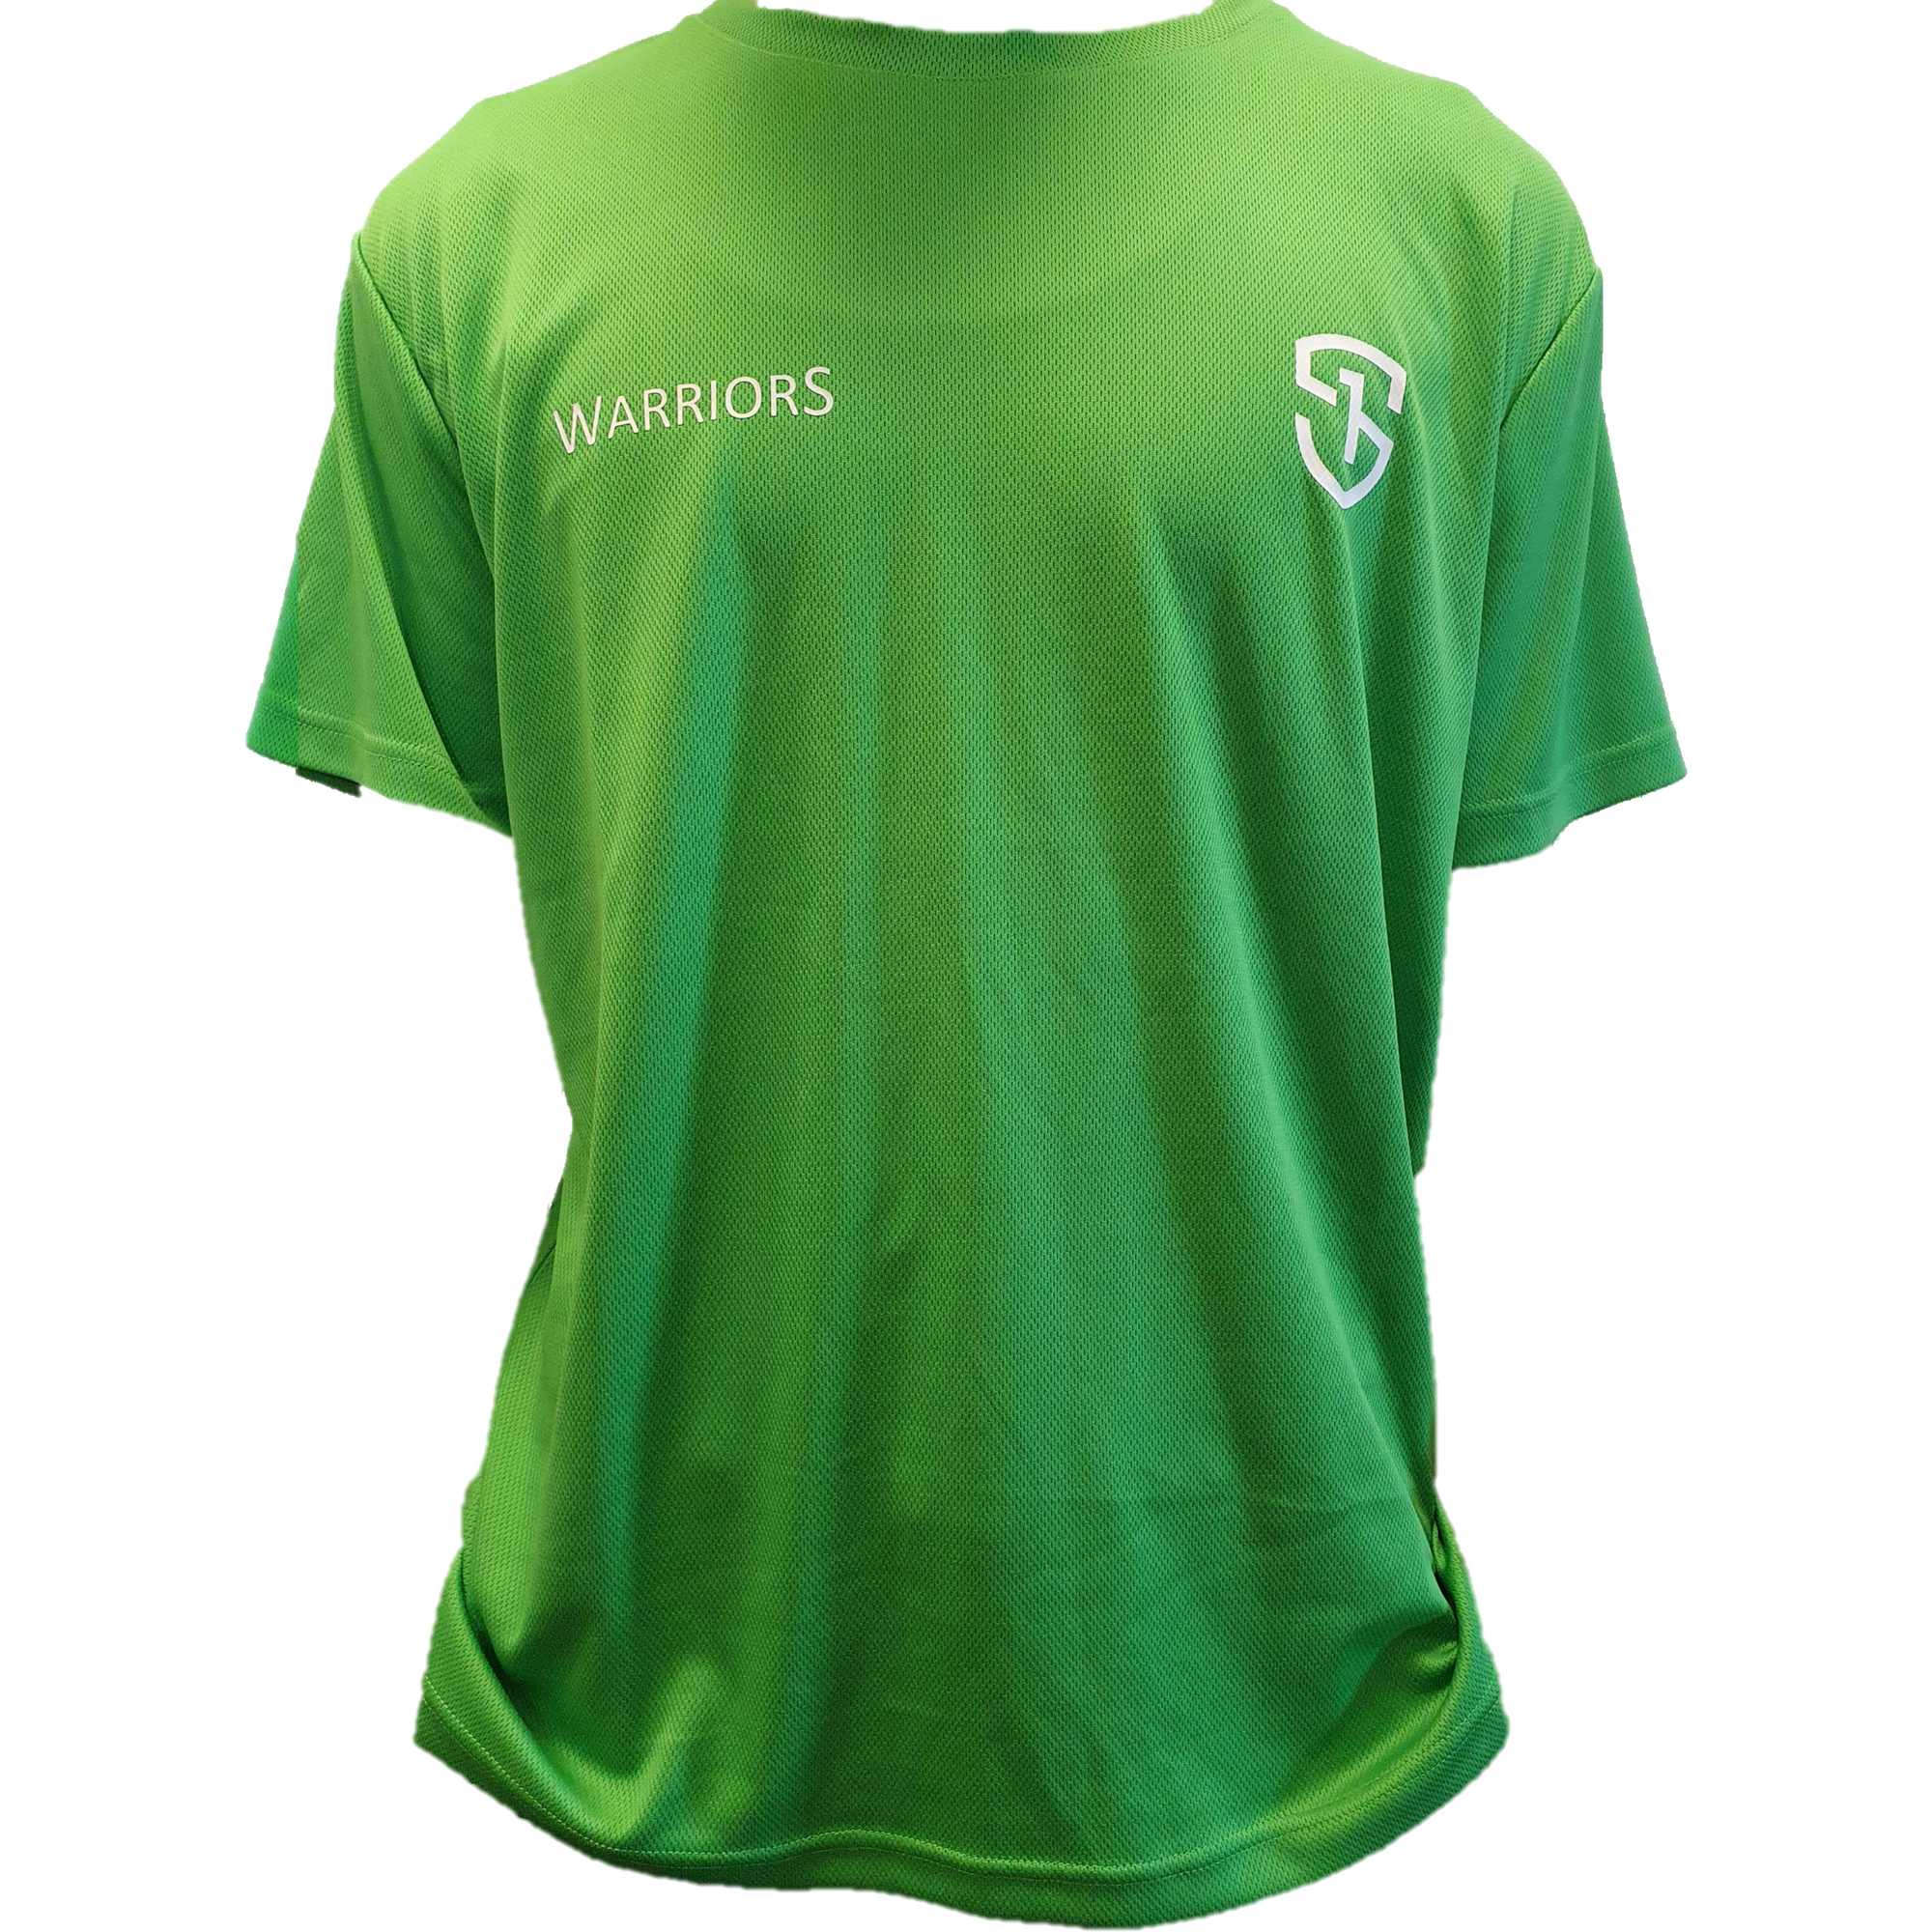 House Team Sports T-shirt Green Size 16